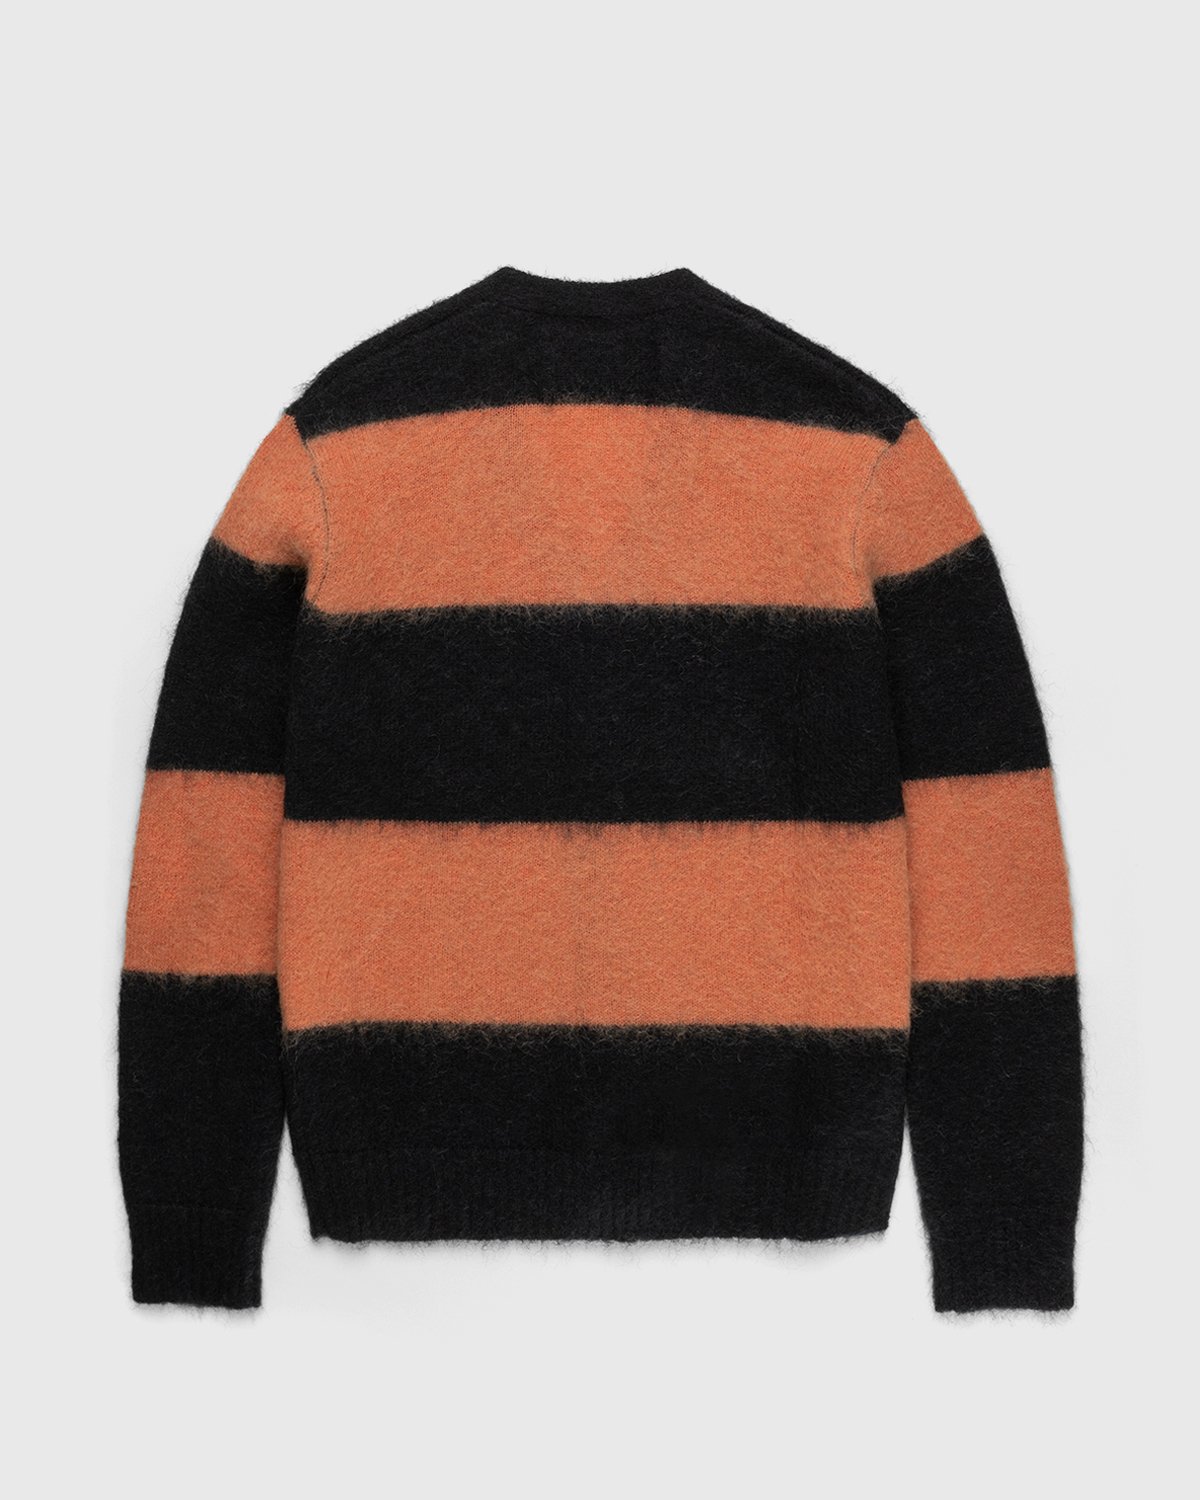 Noon Goons - Undone The Sweater Cardigan Brown/Orange - Clothing - Orange - Image 2